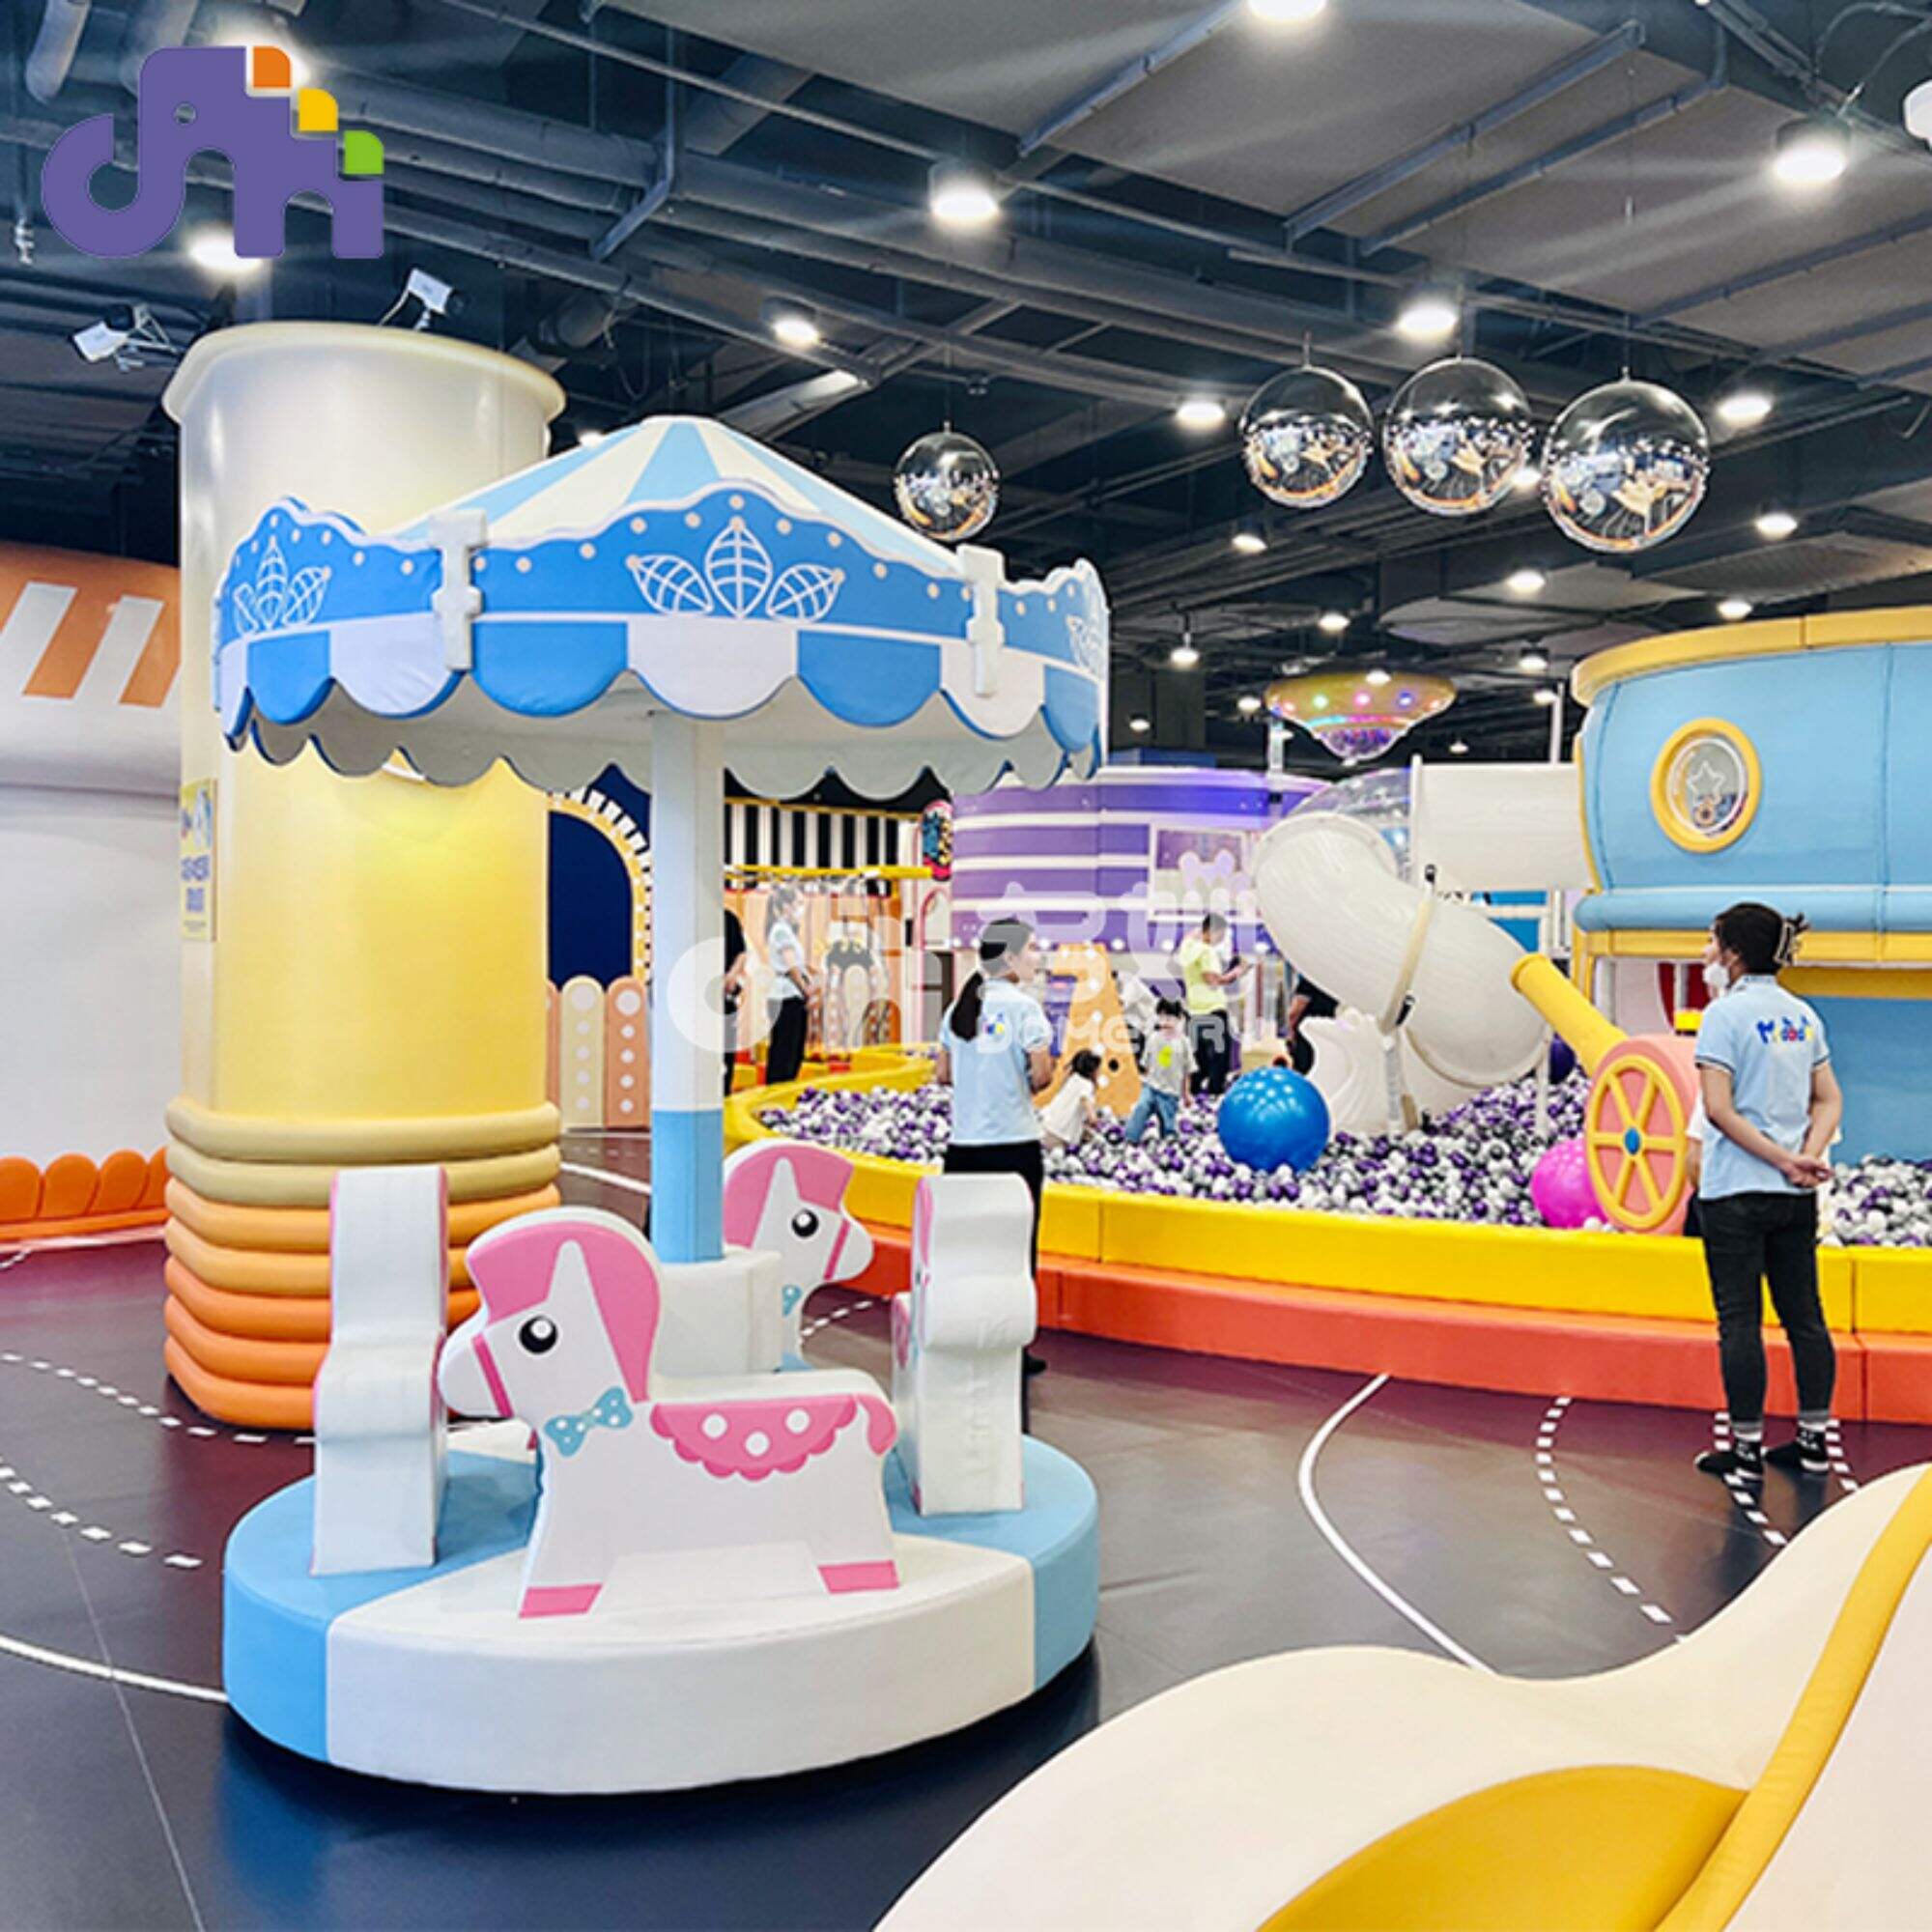 Naughty castle game theme children play park slide center play zone indoor kids amusement playground